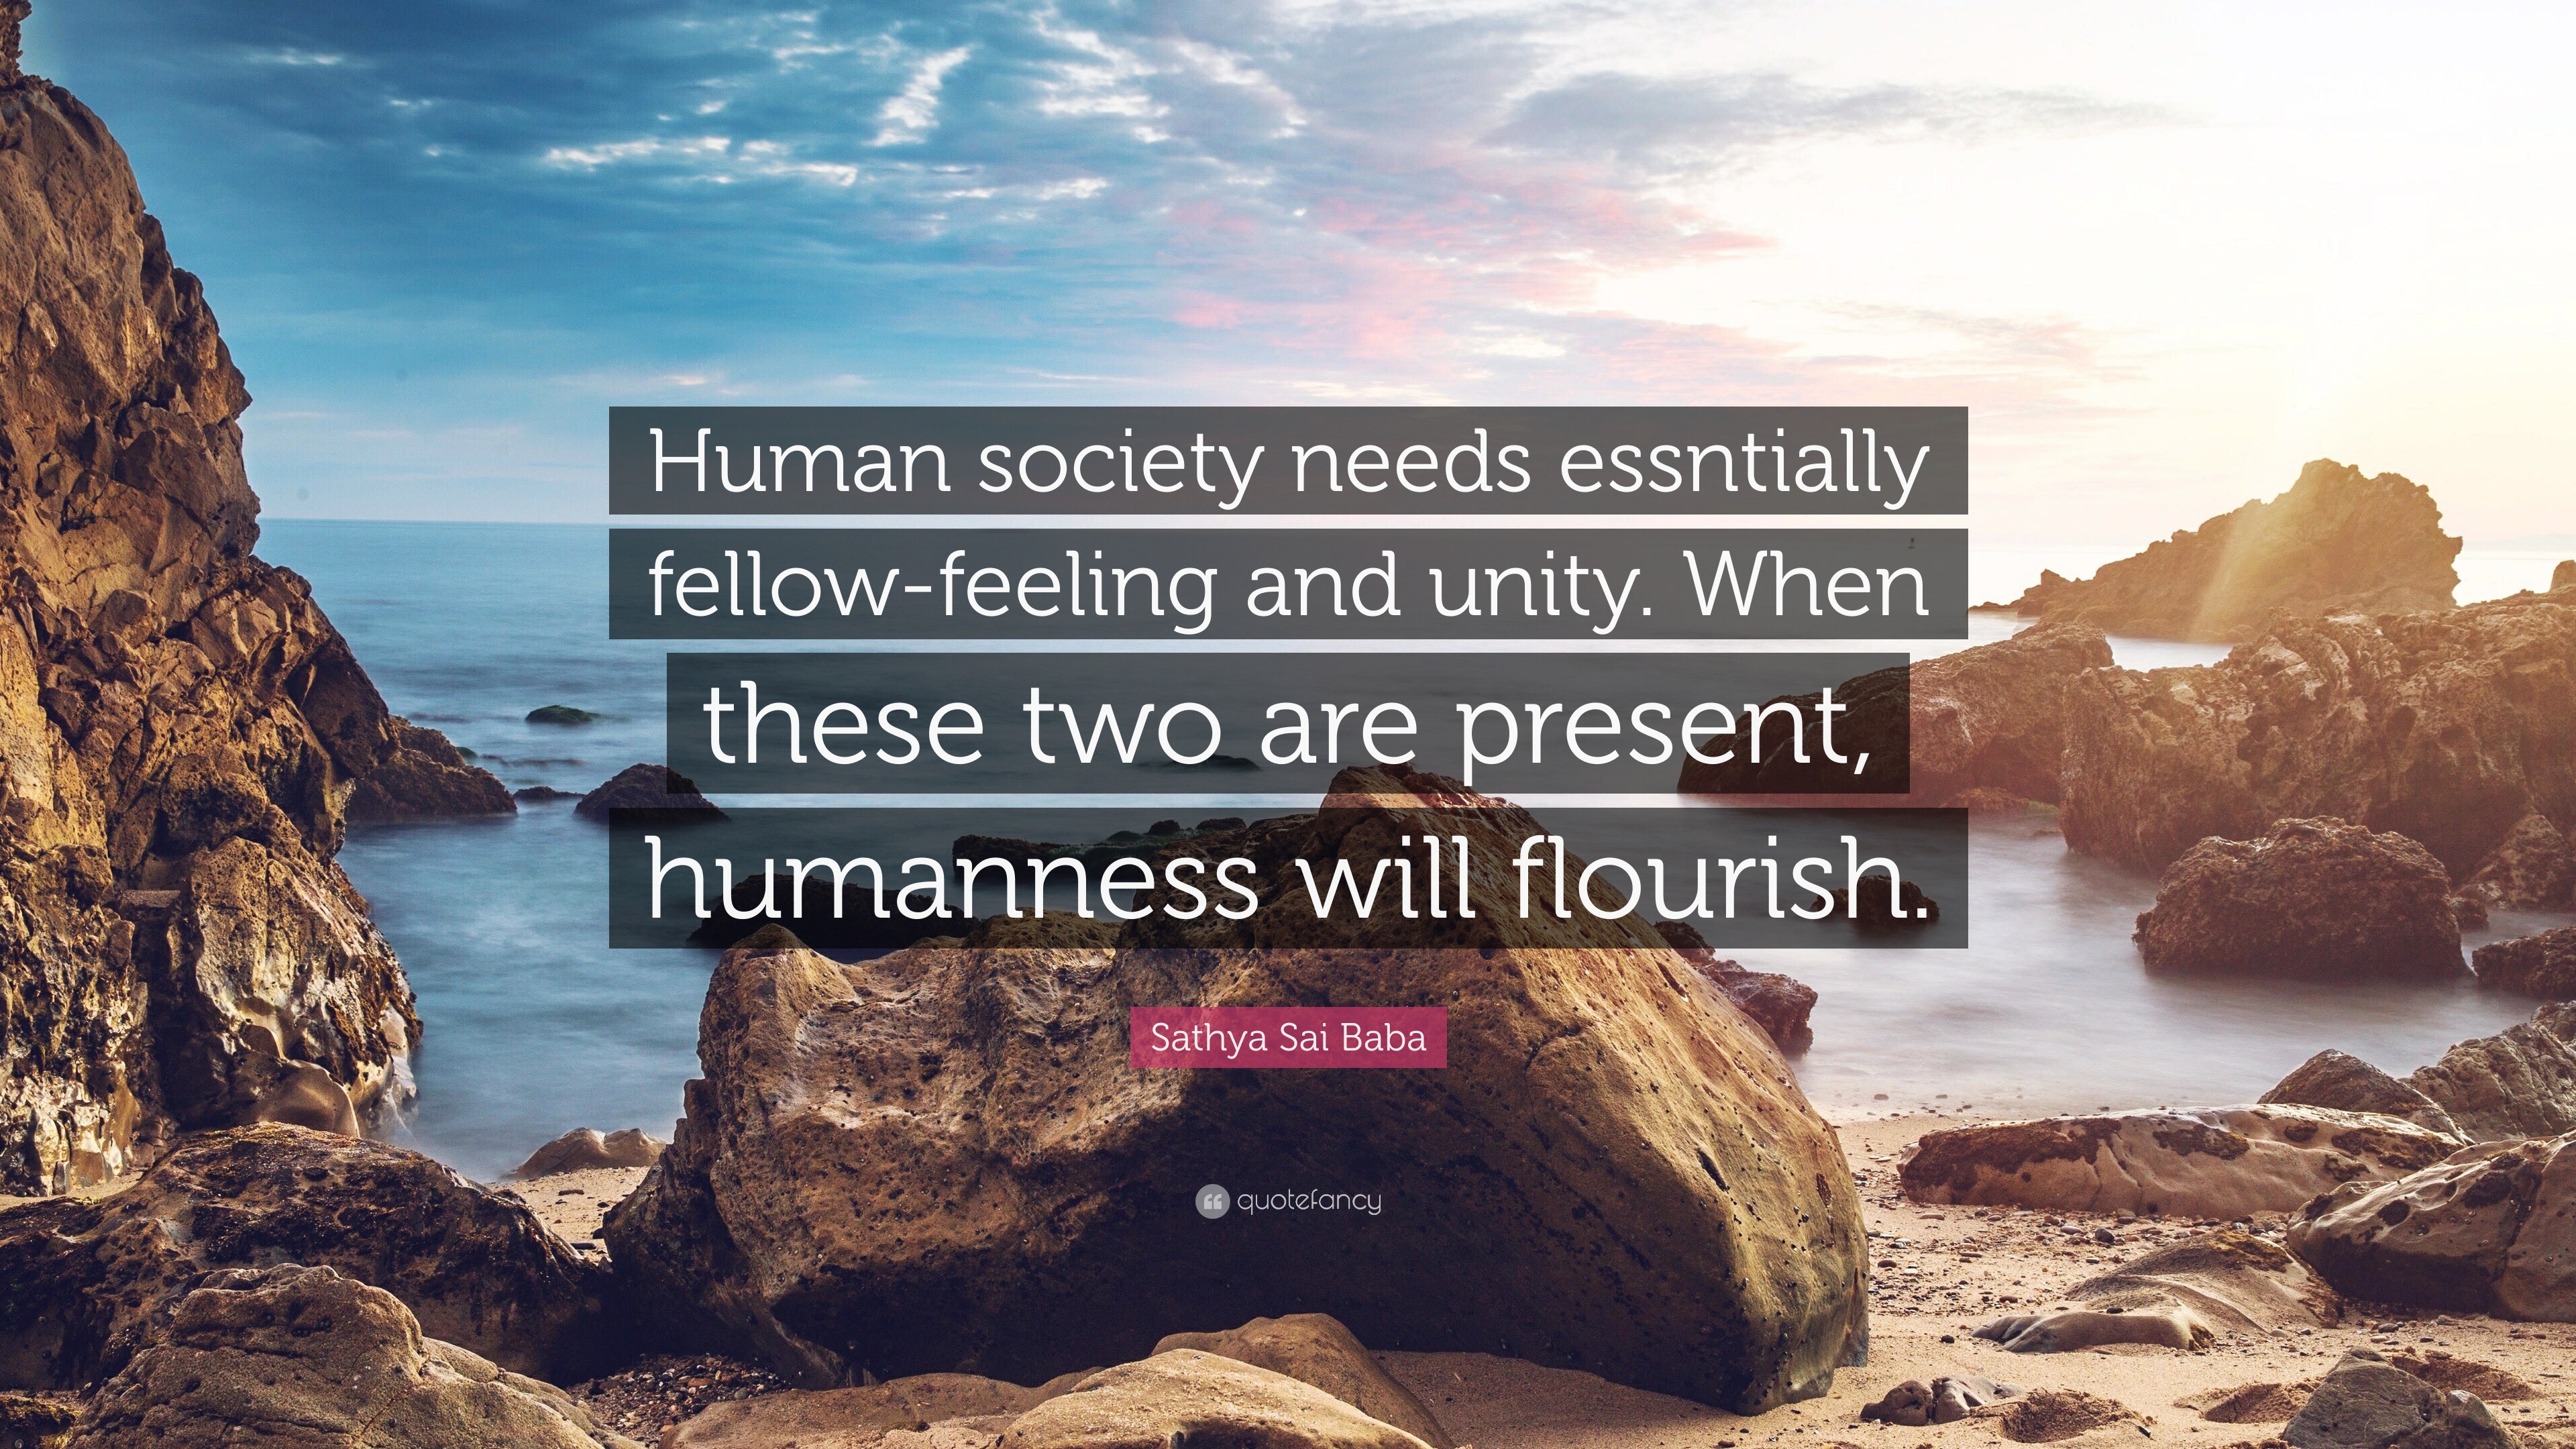 Sathya Sai Baba Quote: “Human society needs essntially fellow